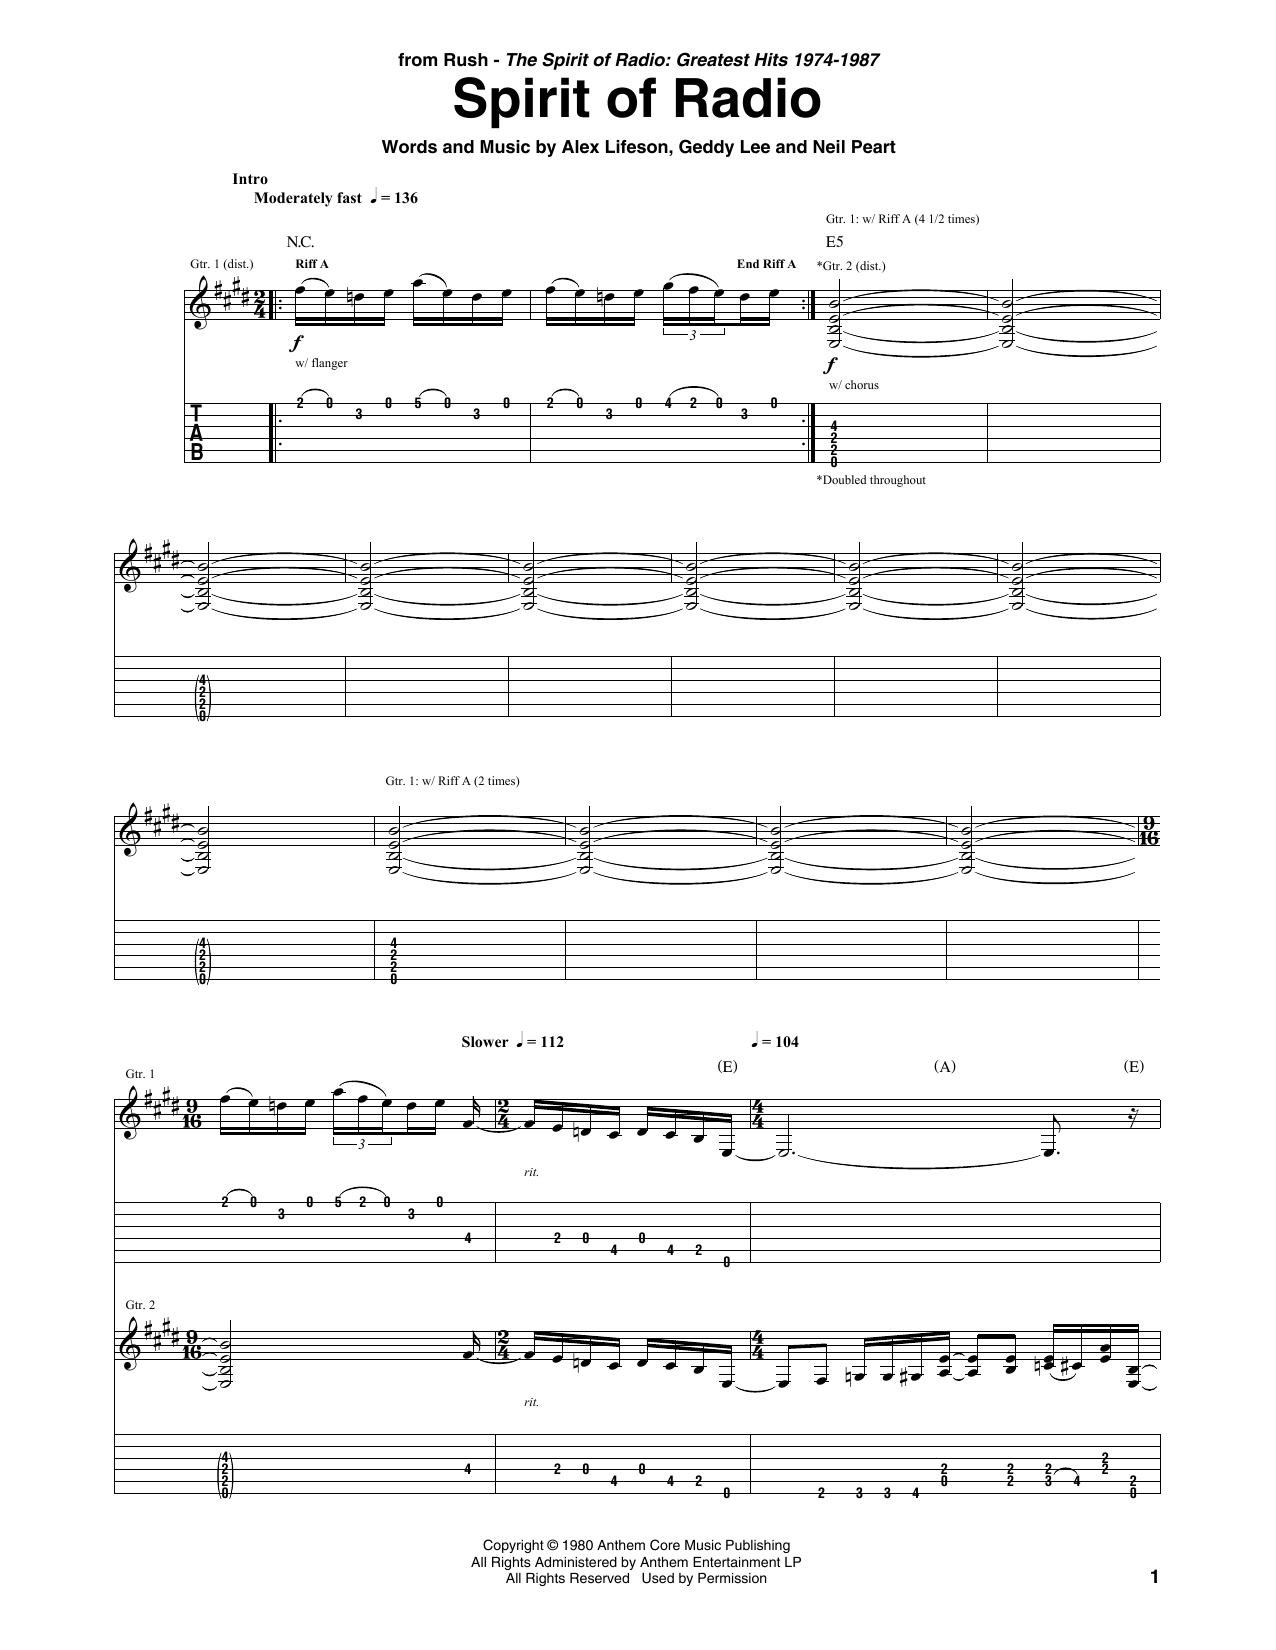 Rush Spirit Of Radio Sheet Music Notes & Chords for Bass Guitar Tab - Download or Print PDF